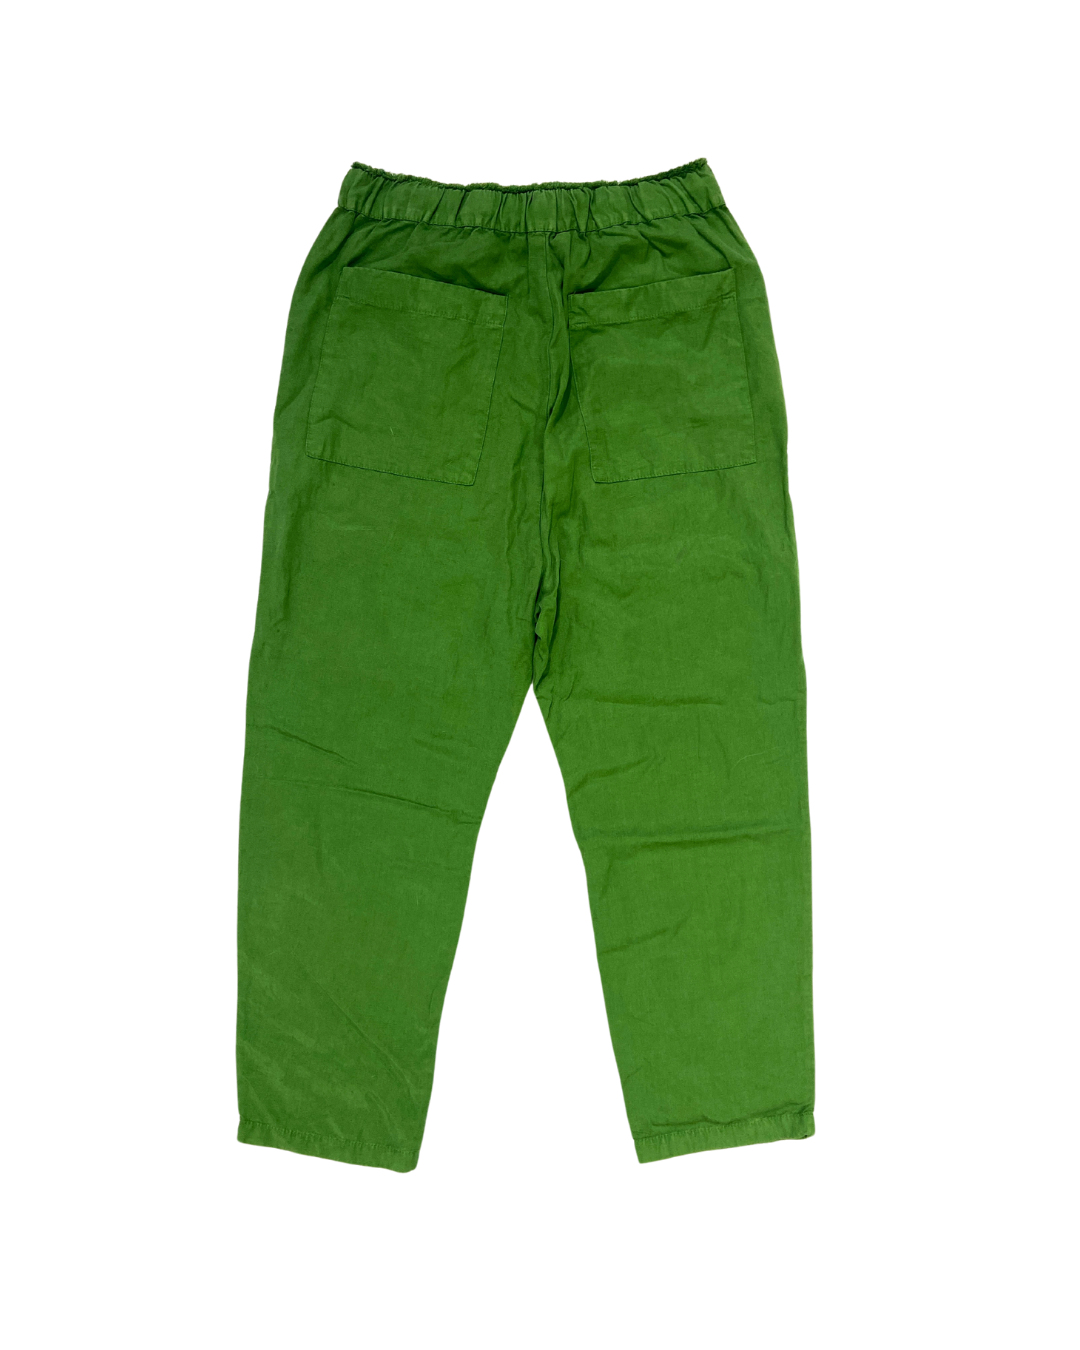 Zara Green Casual Trousers